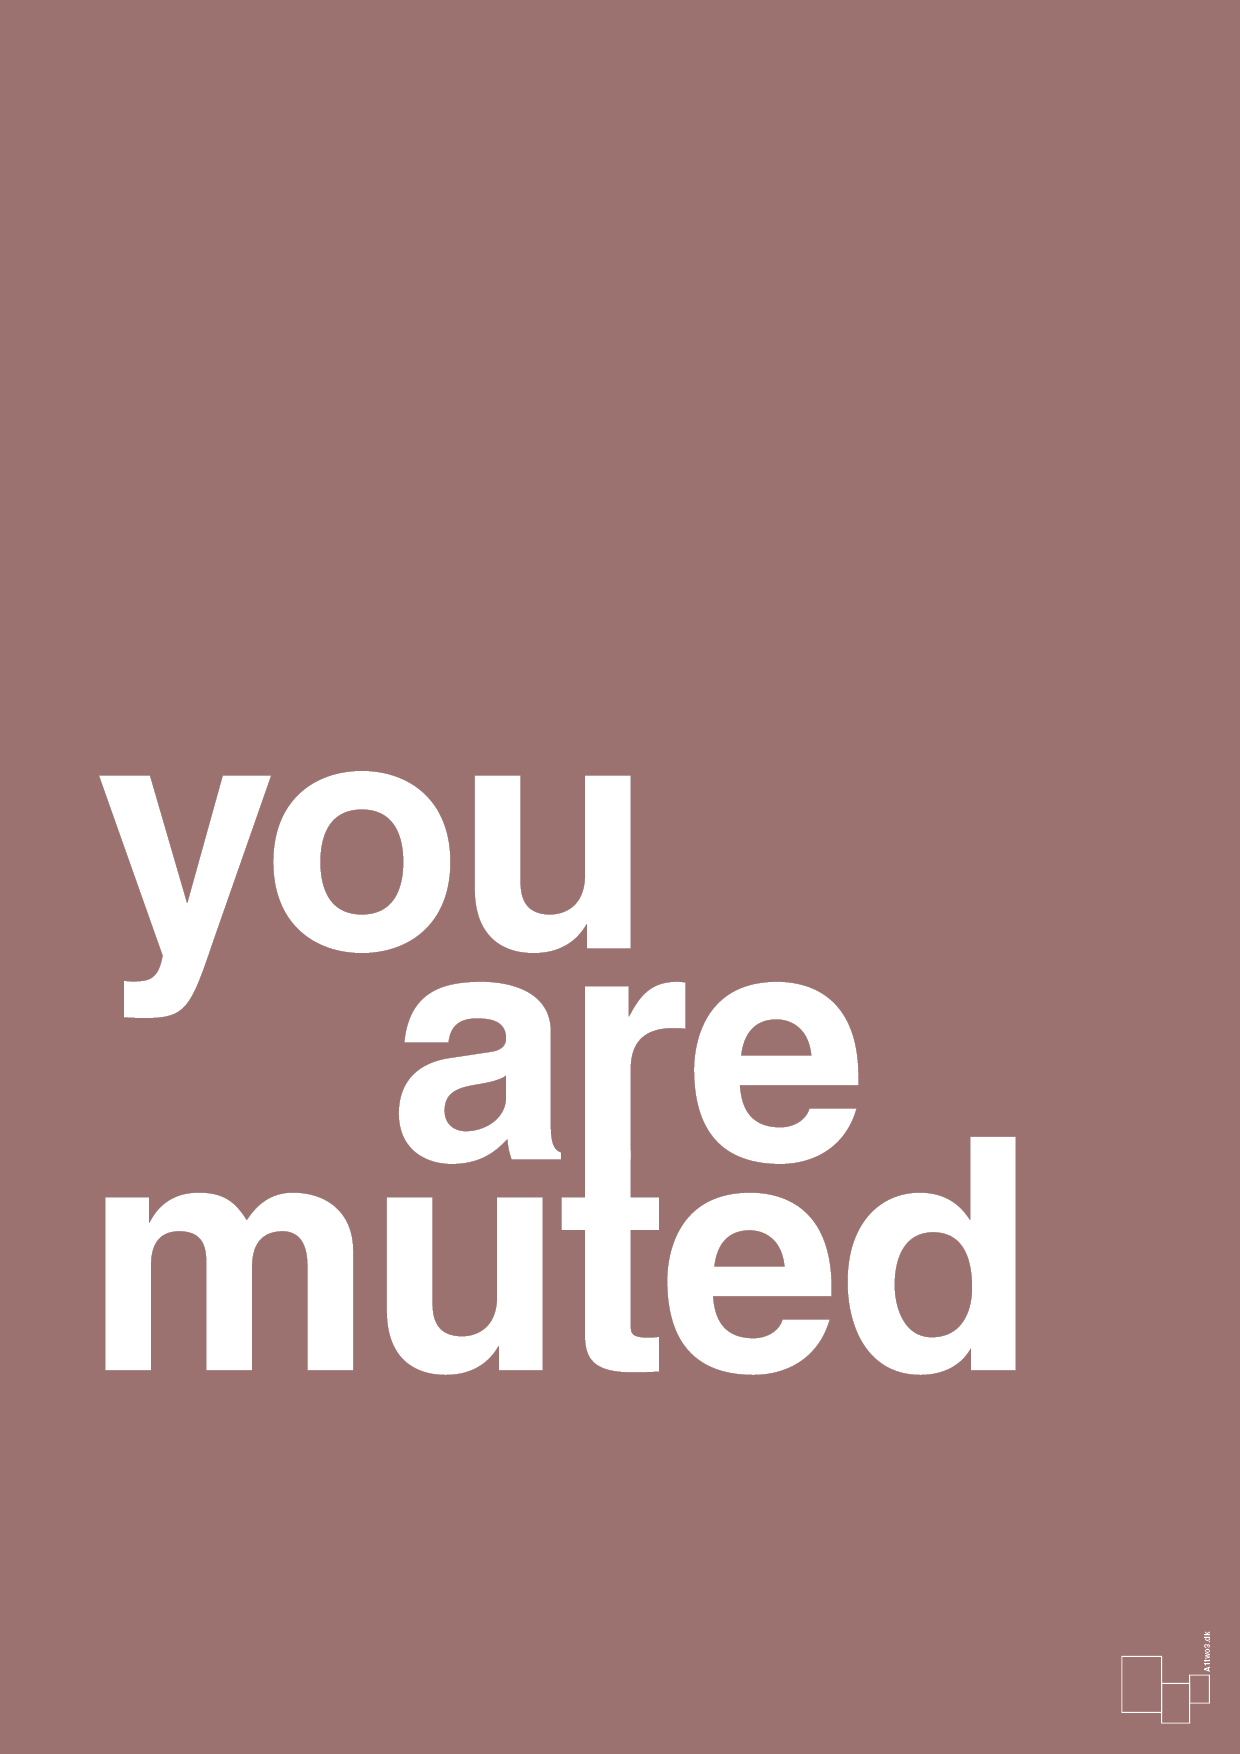 you are muted - Plakat med Ordsprog i Plum